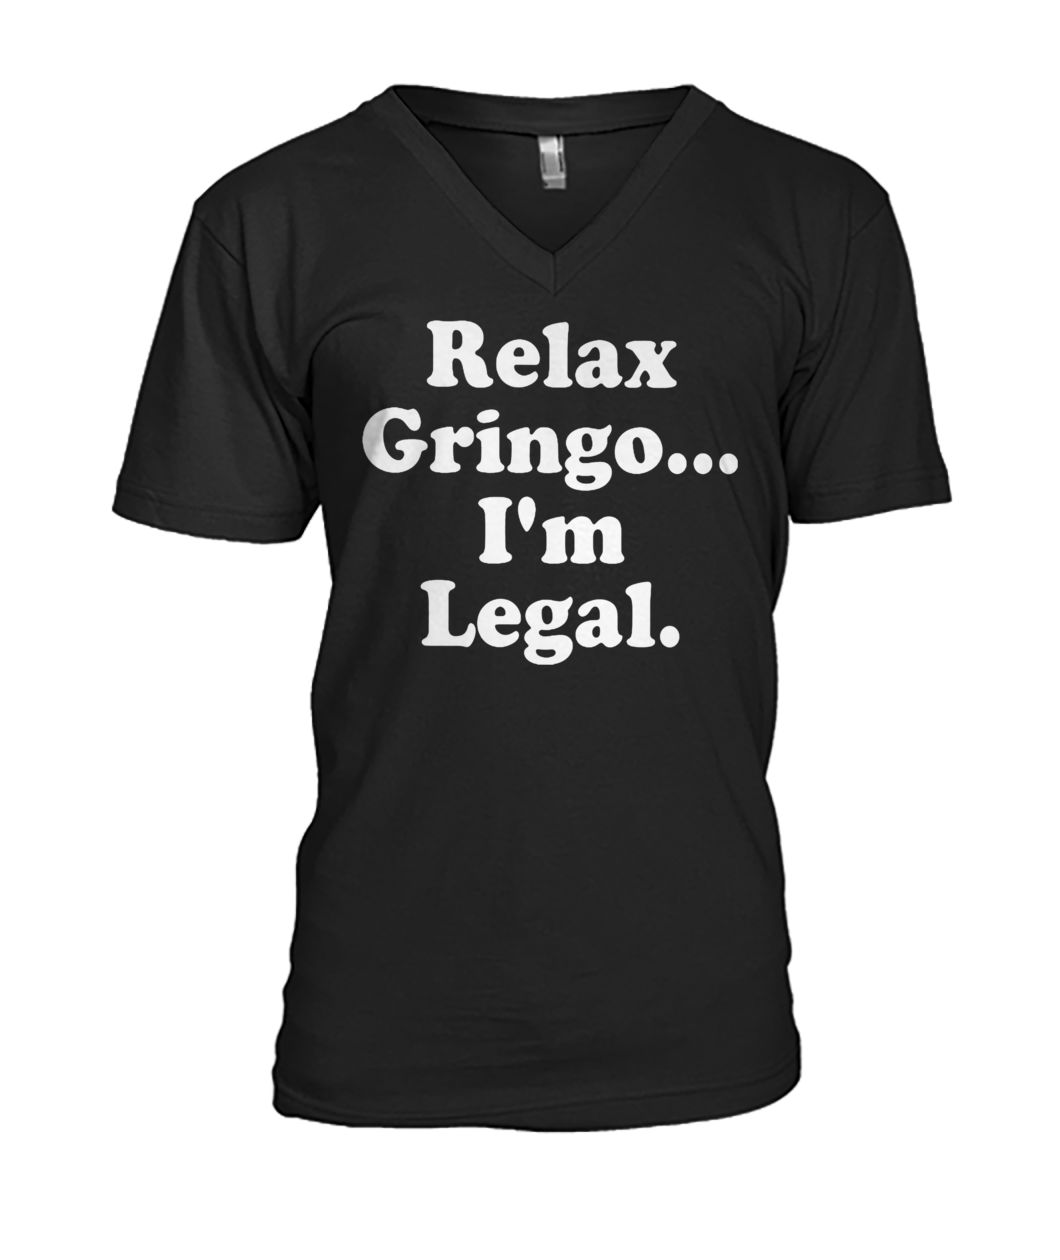 Relax gringo I'm legal mens v-neck